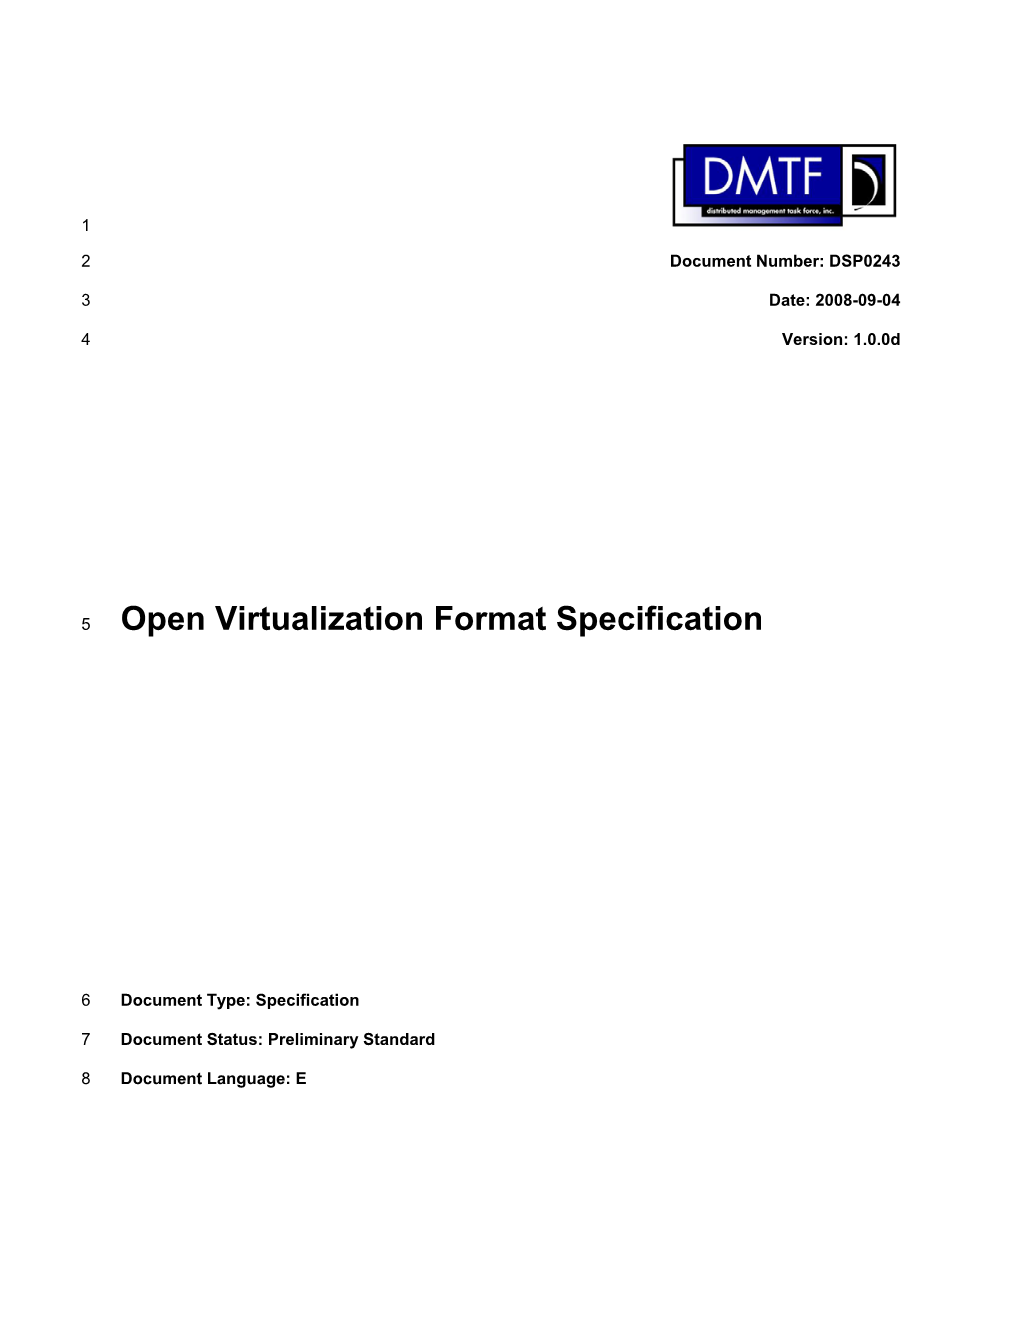 Open Virtualization Format Specification